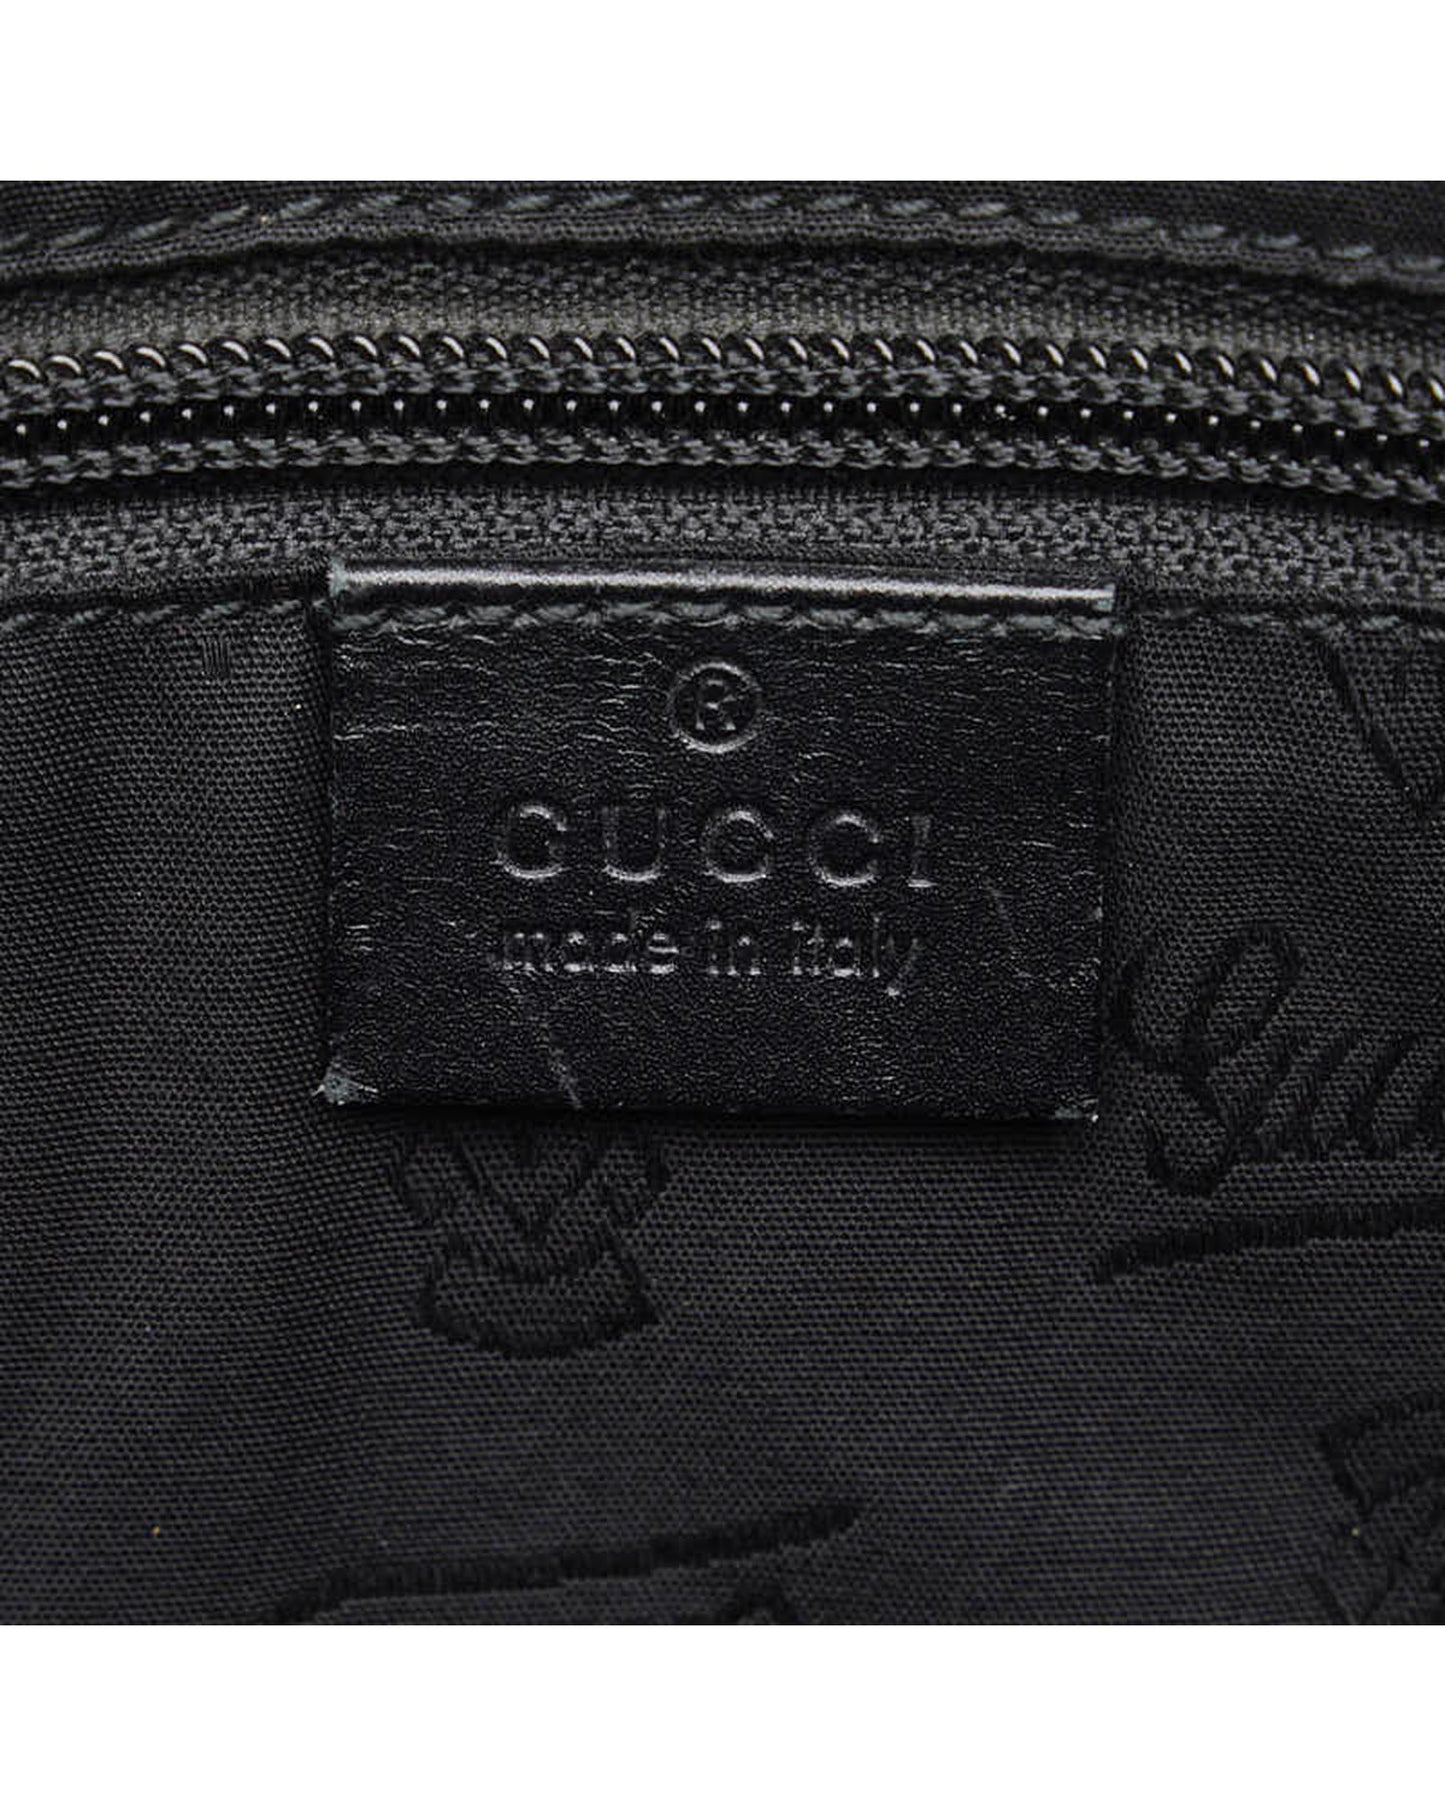 Gucci Women's Black Imprime Messenger Bag in Excellent Condition in Black